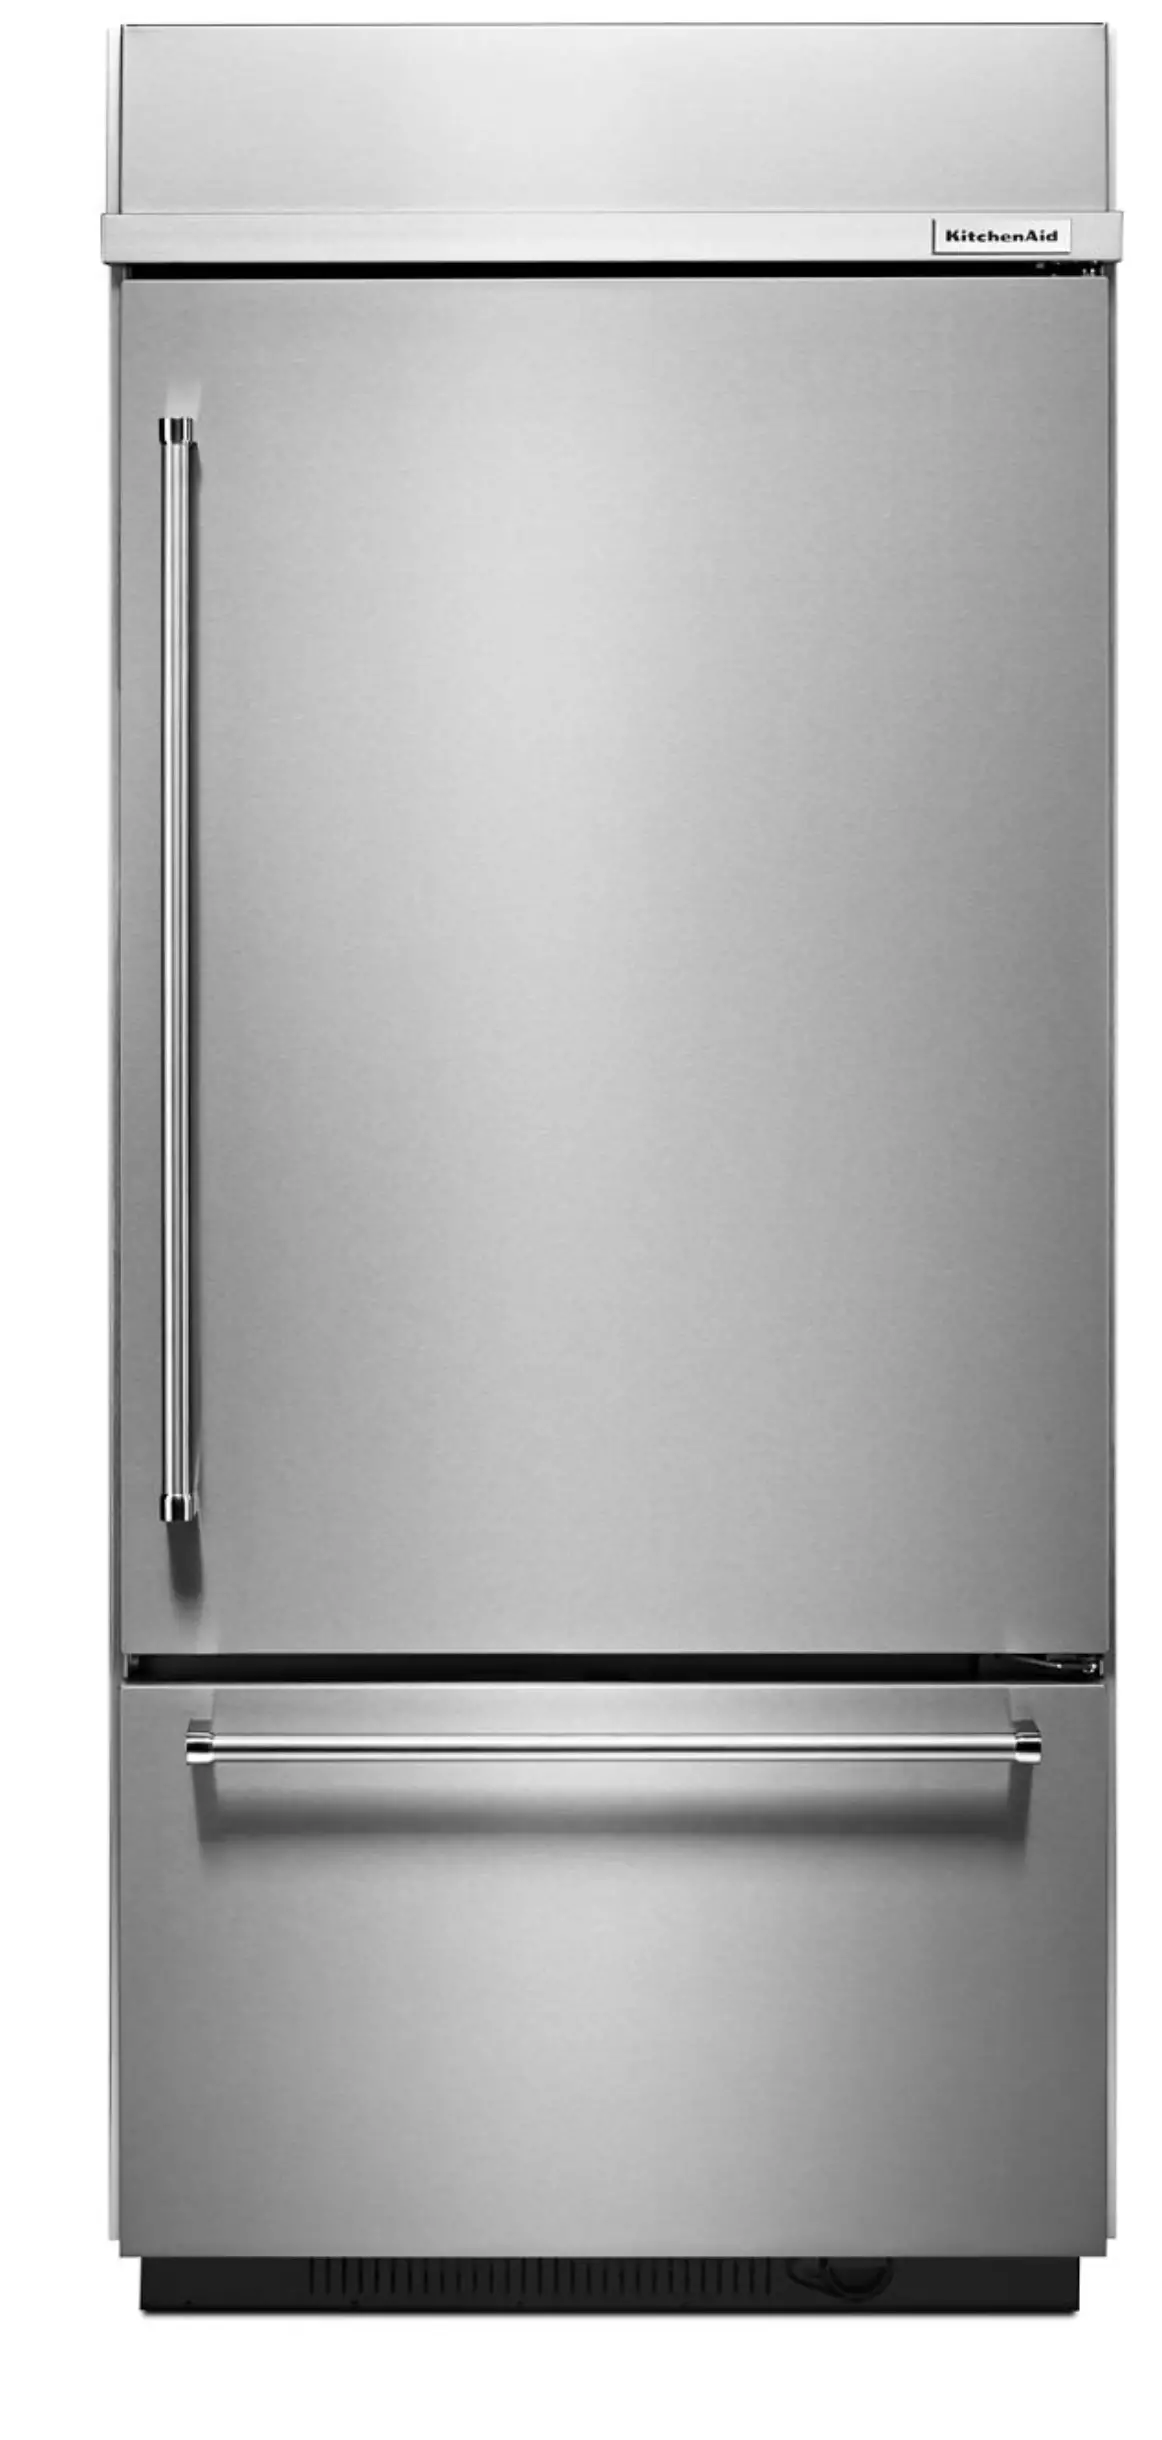 Kitchenaid Refrigerator 